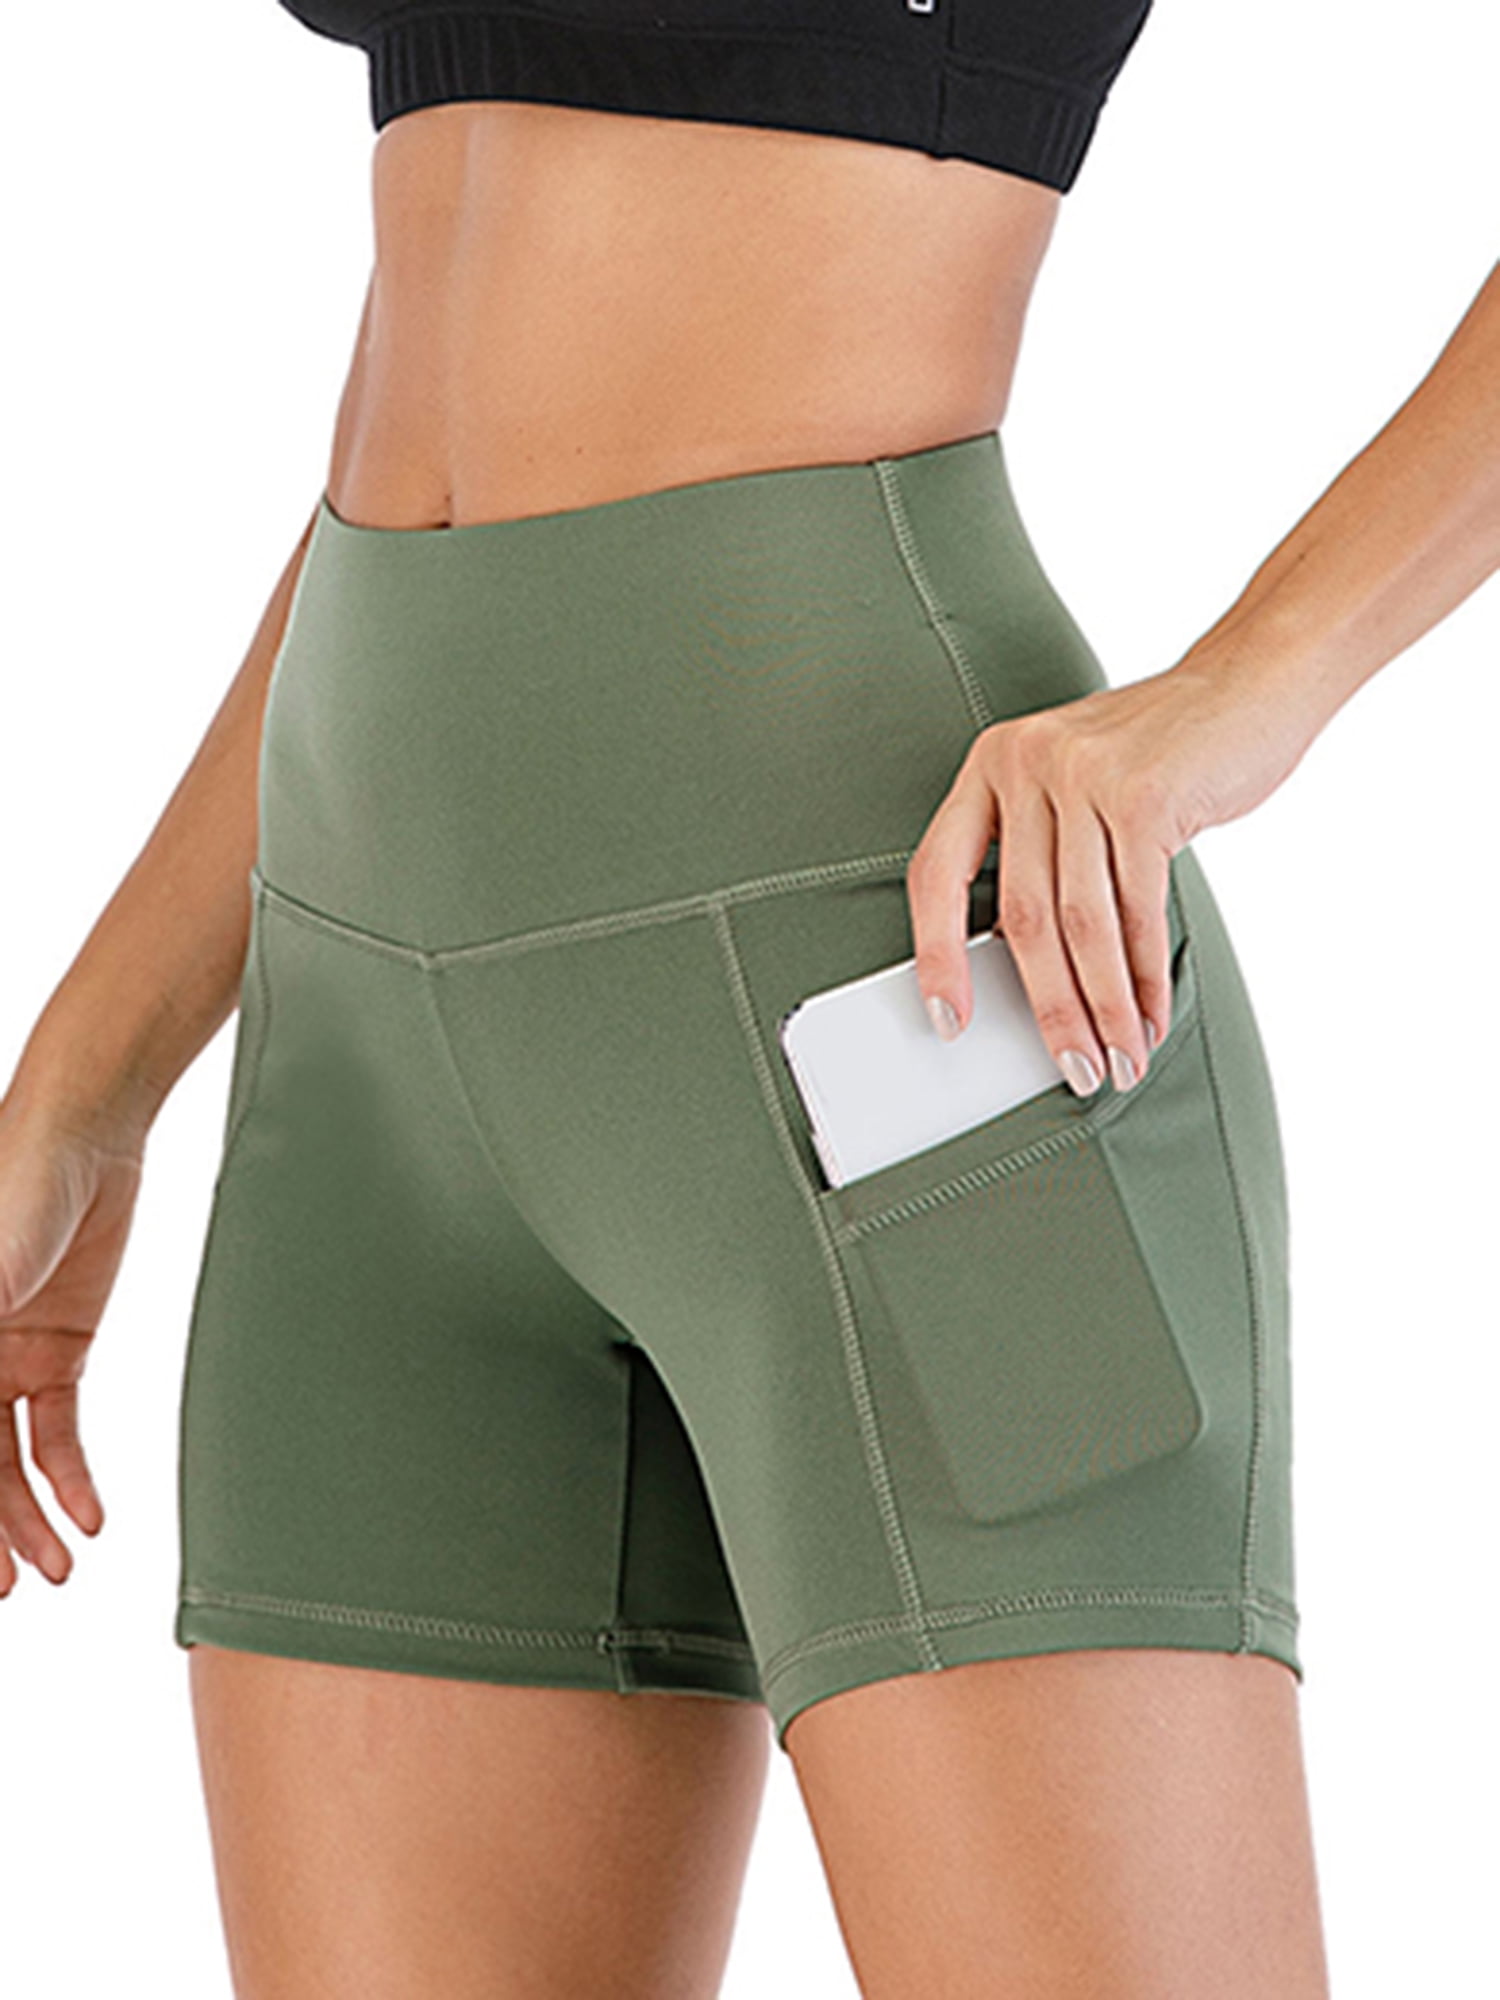 slim senna Yoga Shorts for Women Workout Running High Waist Tummy Control Biker Sports Gym Shorts with Pockets 